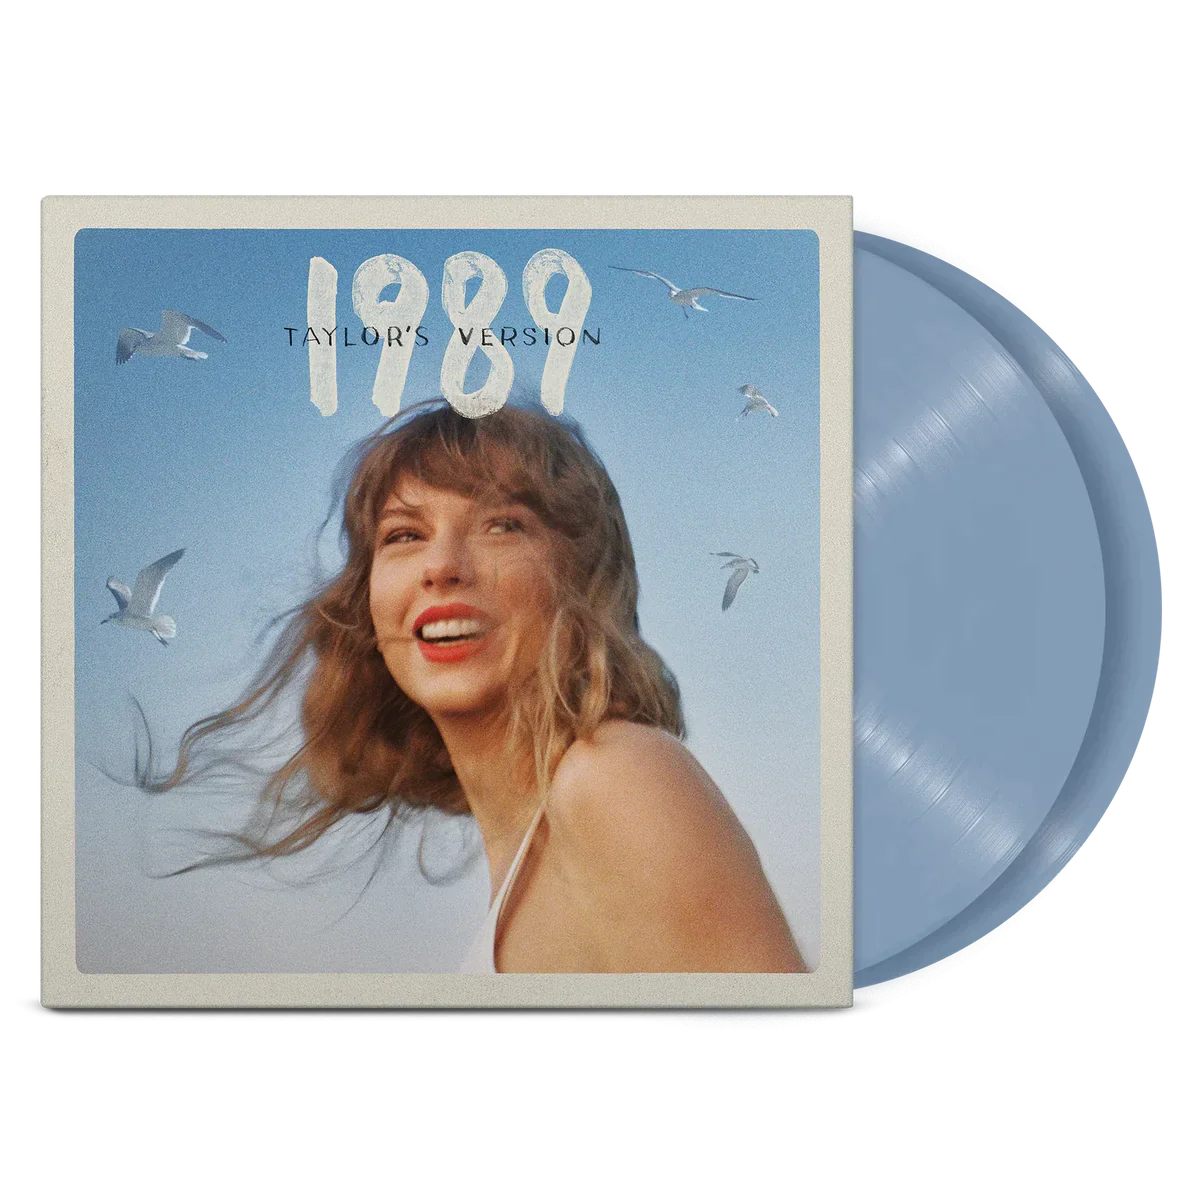 Taylor Swift 1989 Taylor's Version LP - Ireland Vinyl